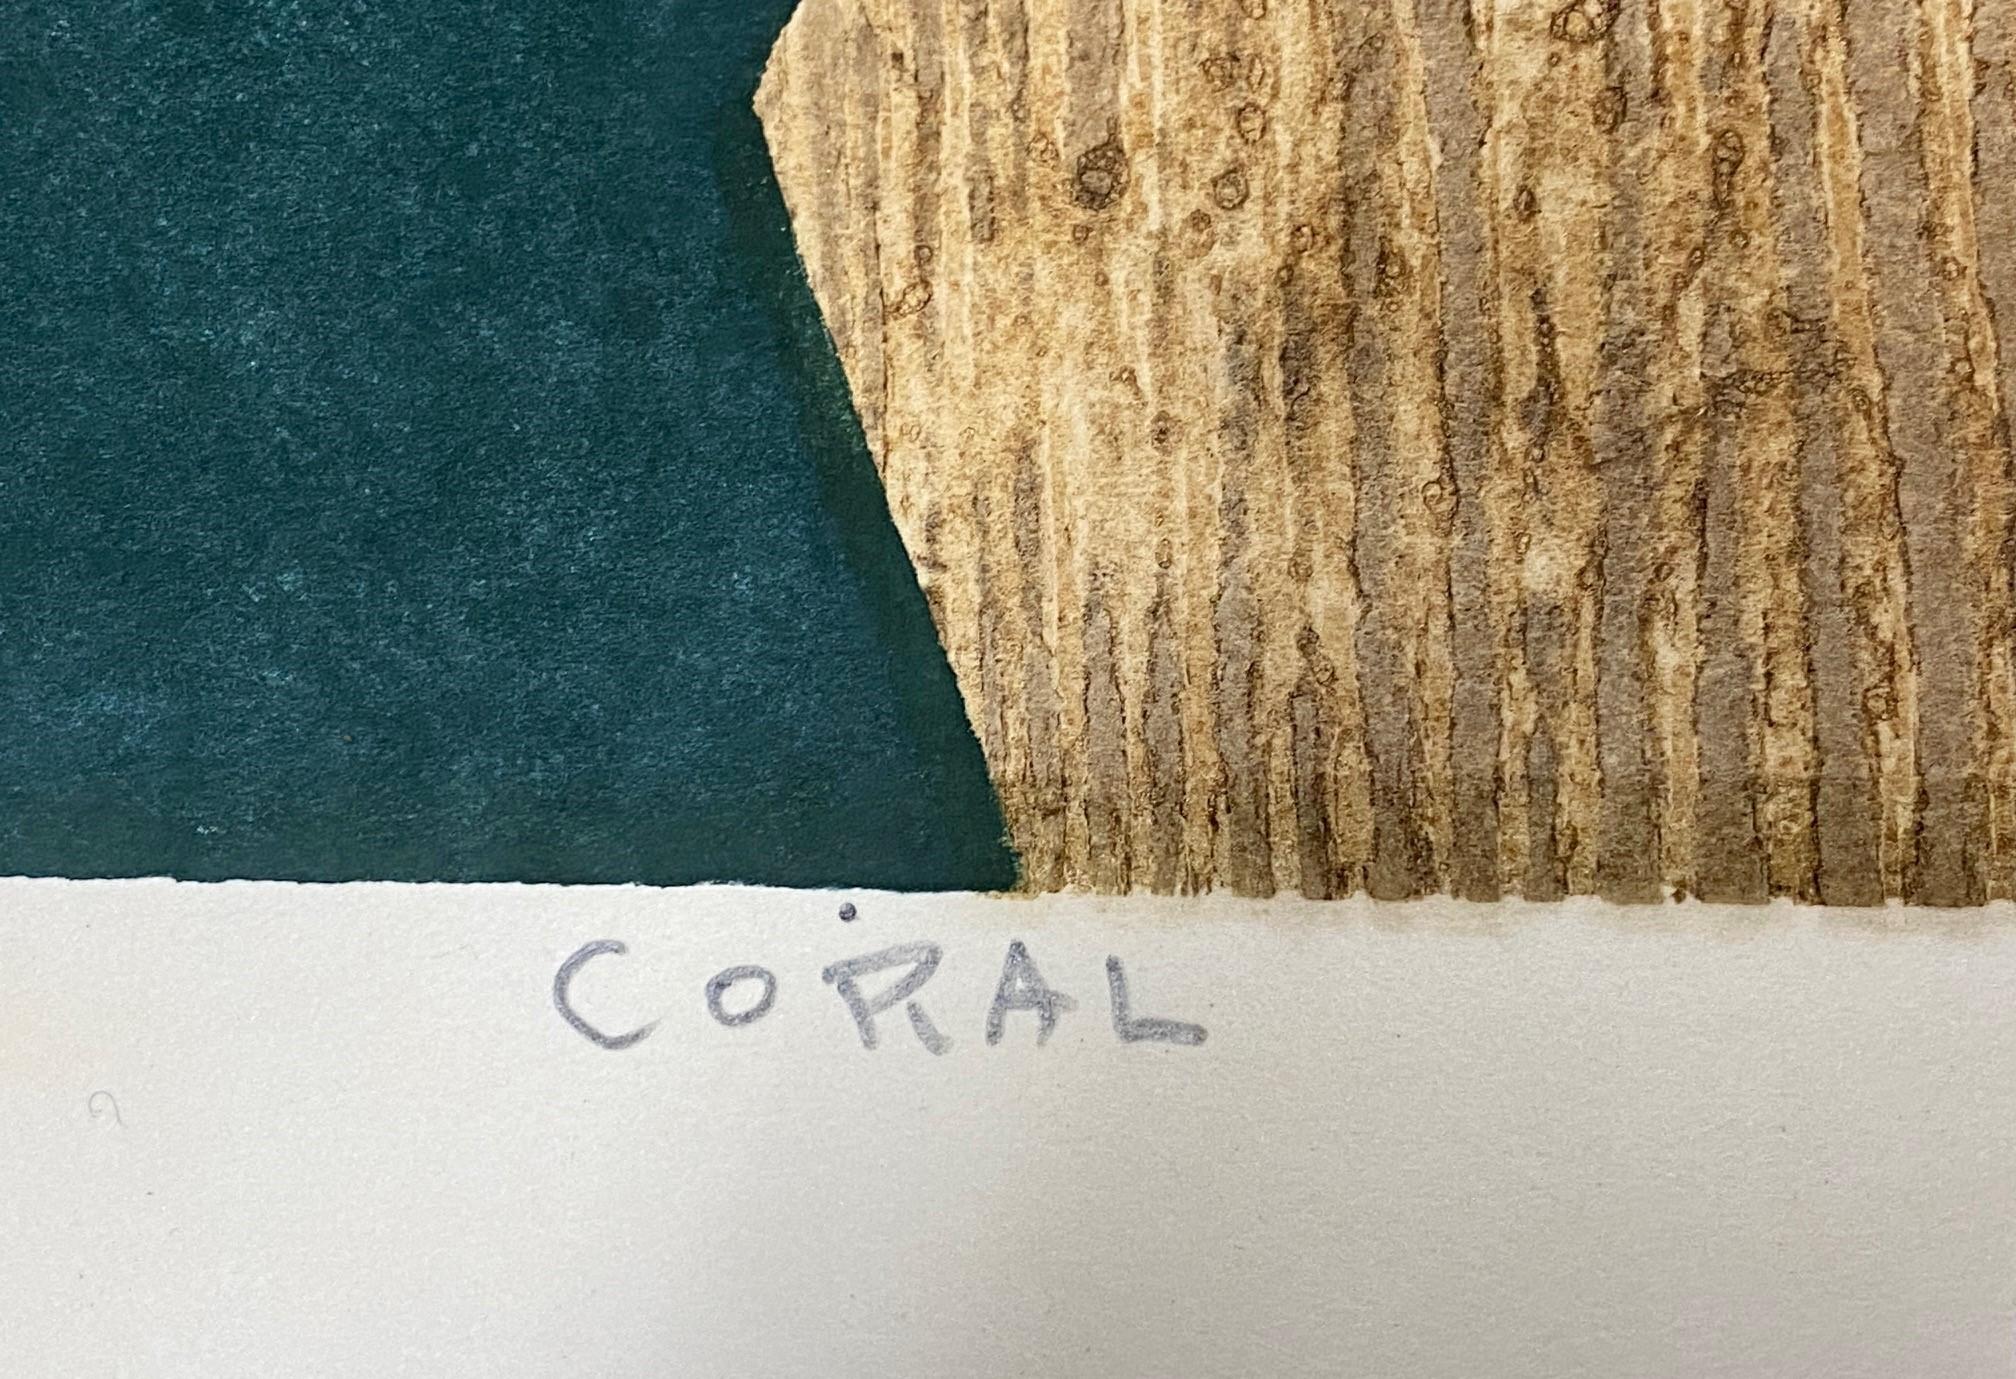 Kiyoshi Saito Signed Limited Edition Japanese Woodblock Print Coral (B), 1958 For Sale 3